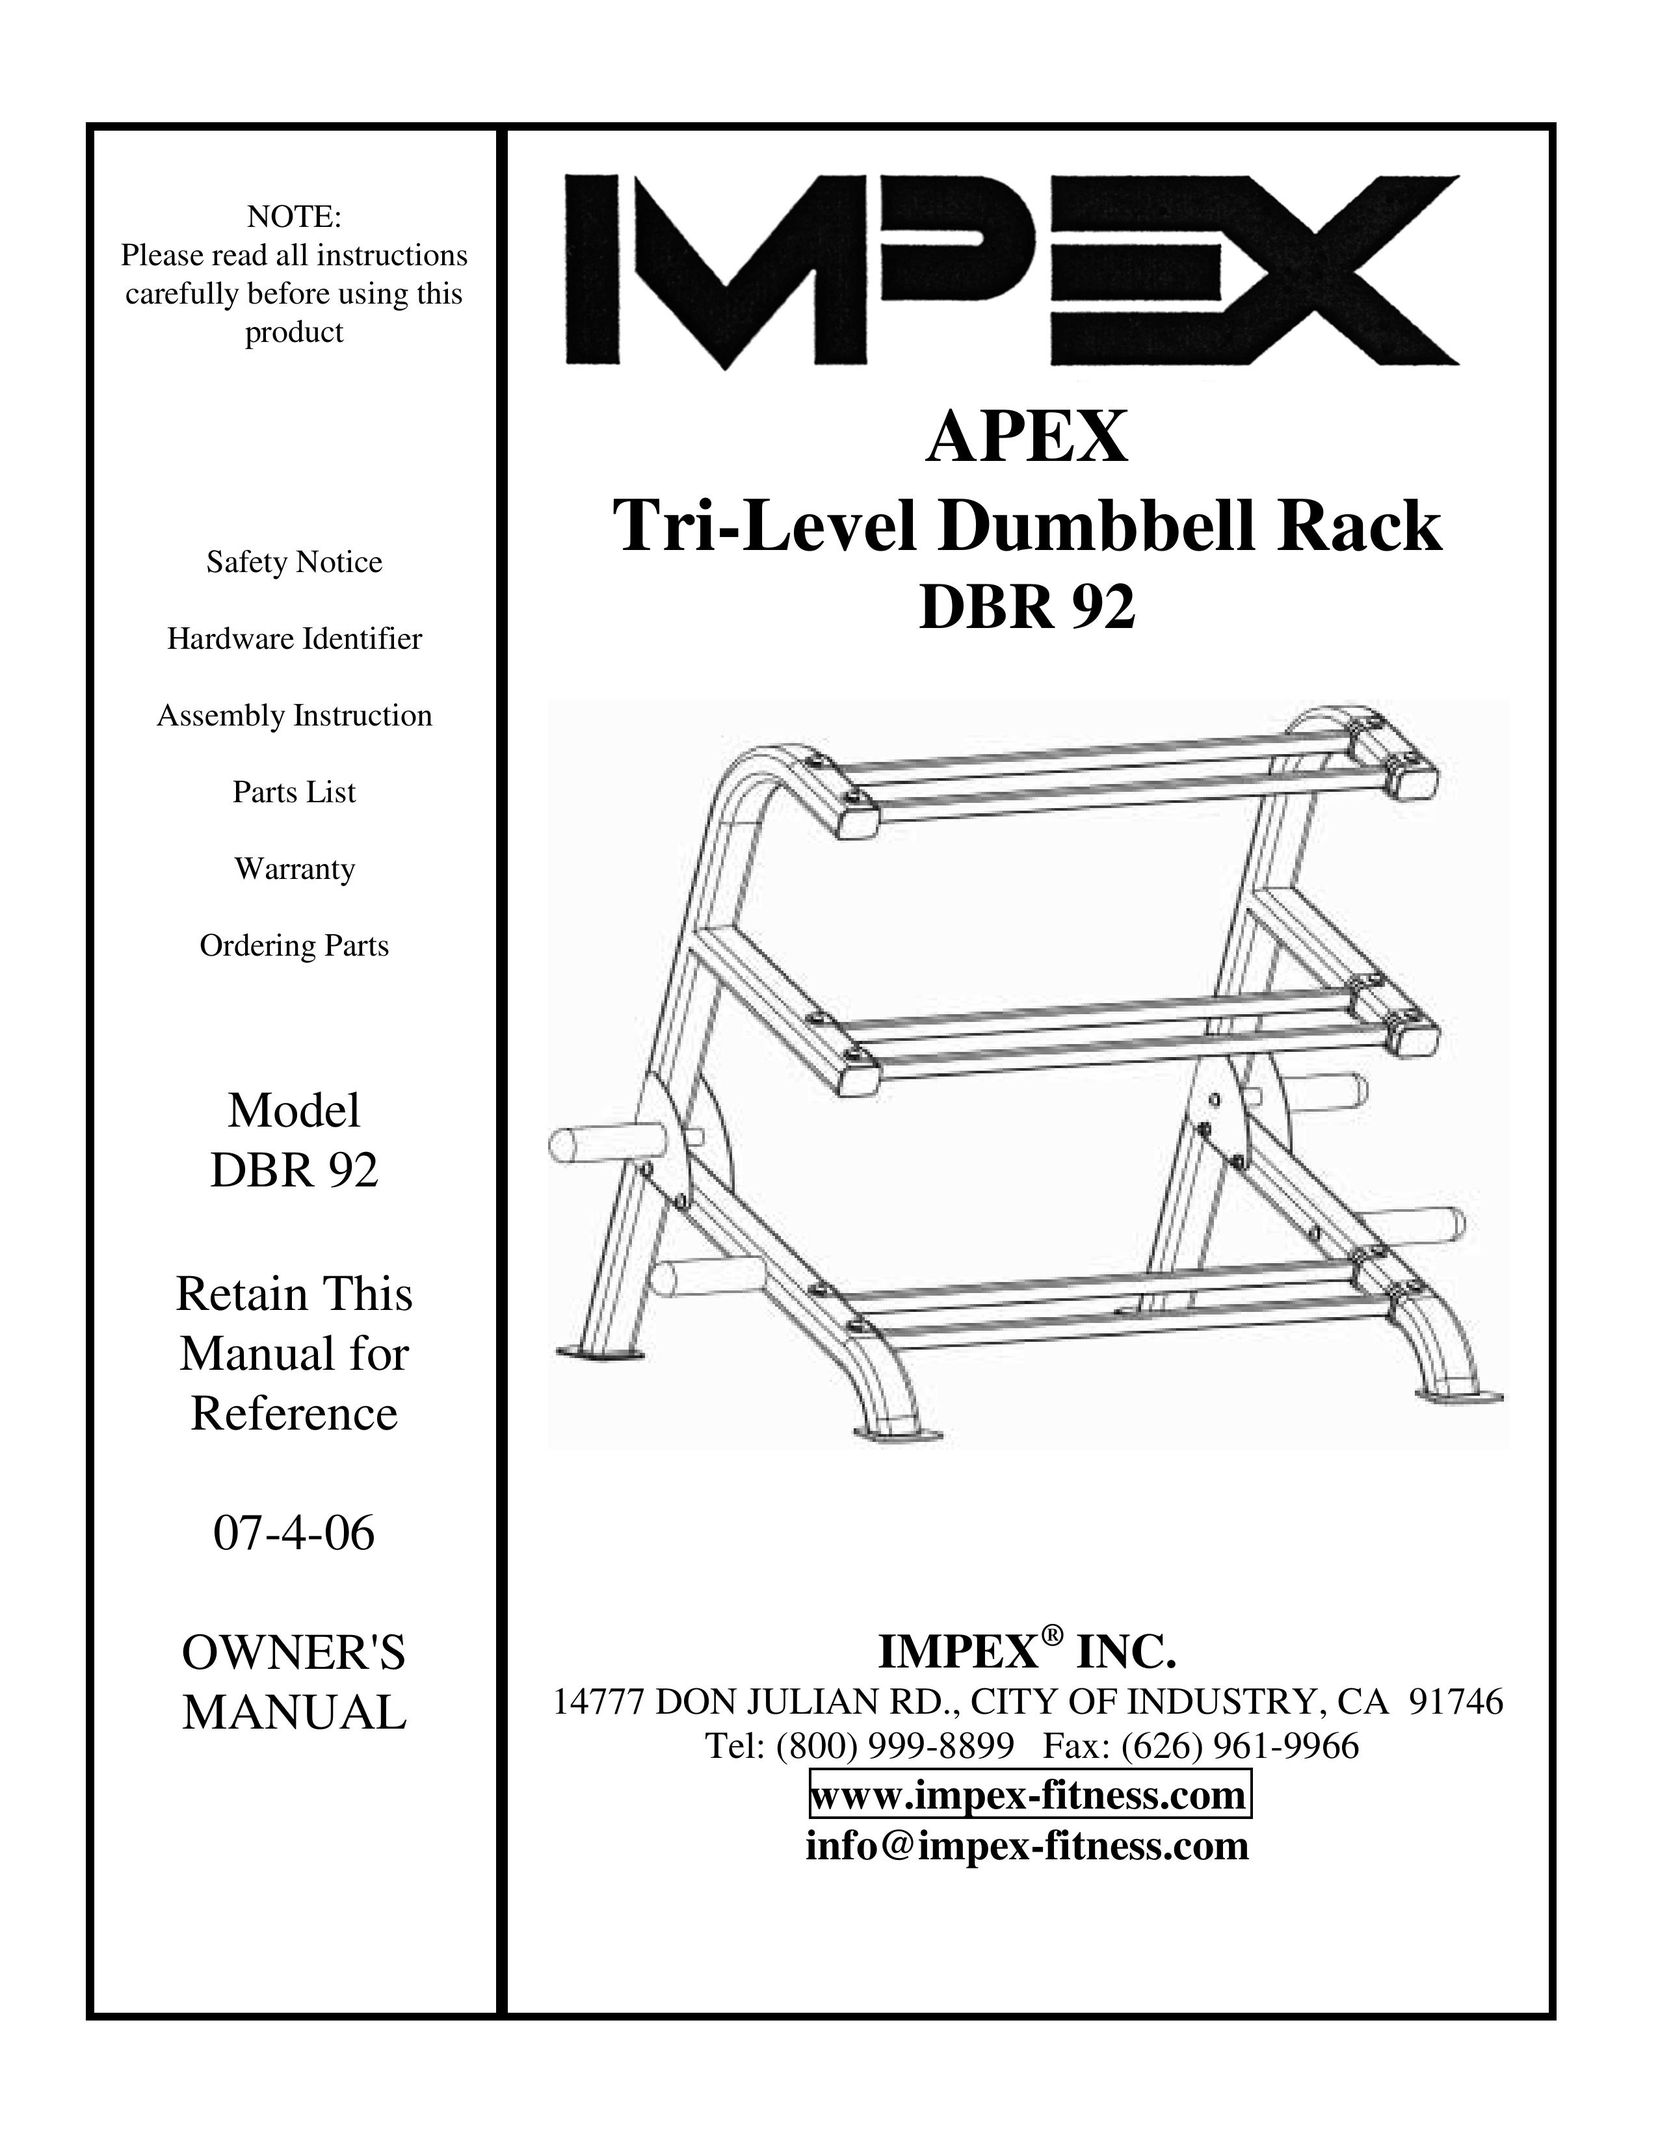 Impex DBR 92 Home Gym User Manual